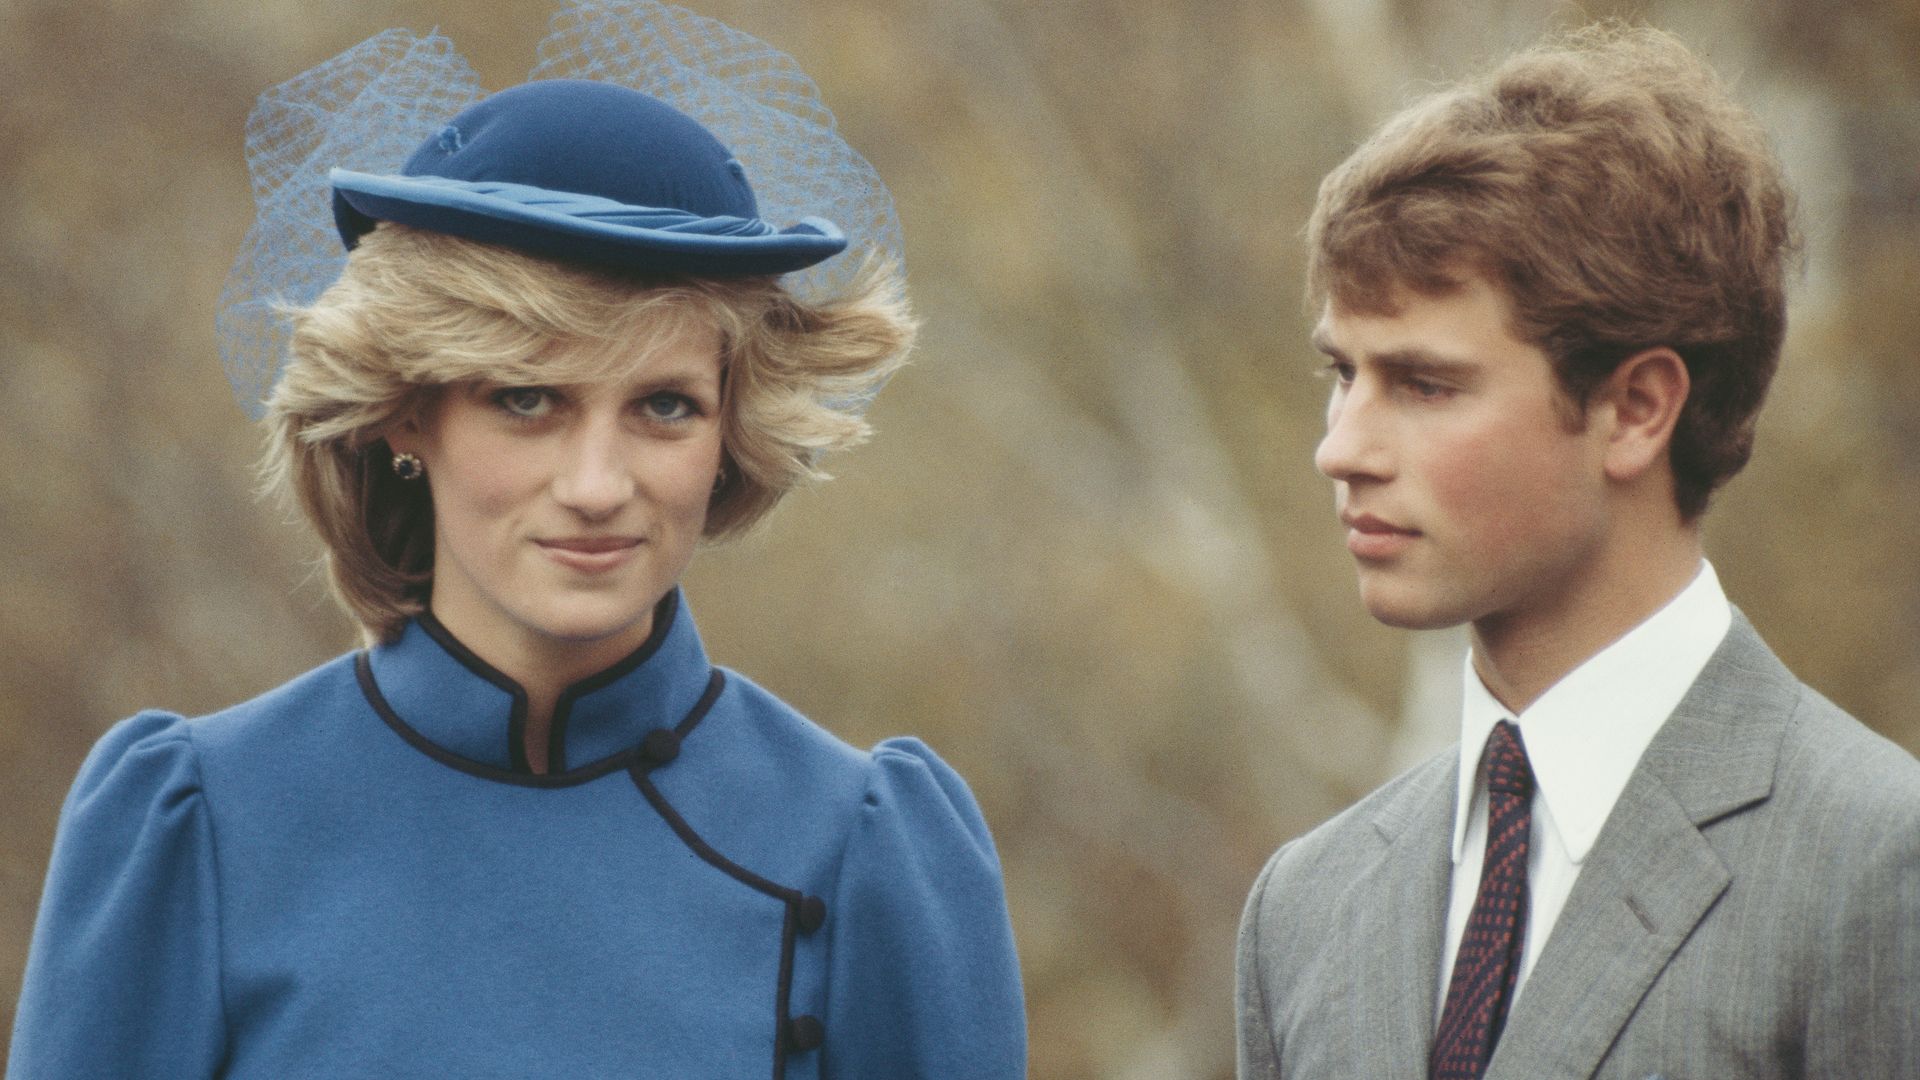 Princess Diana and Prince Edward in New Zealand